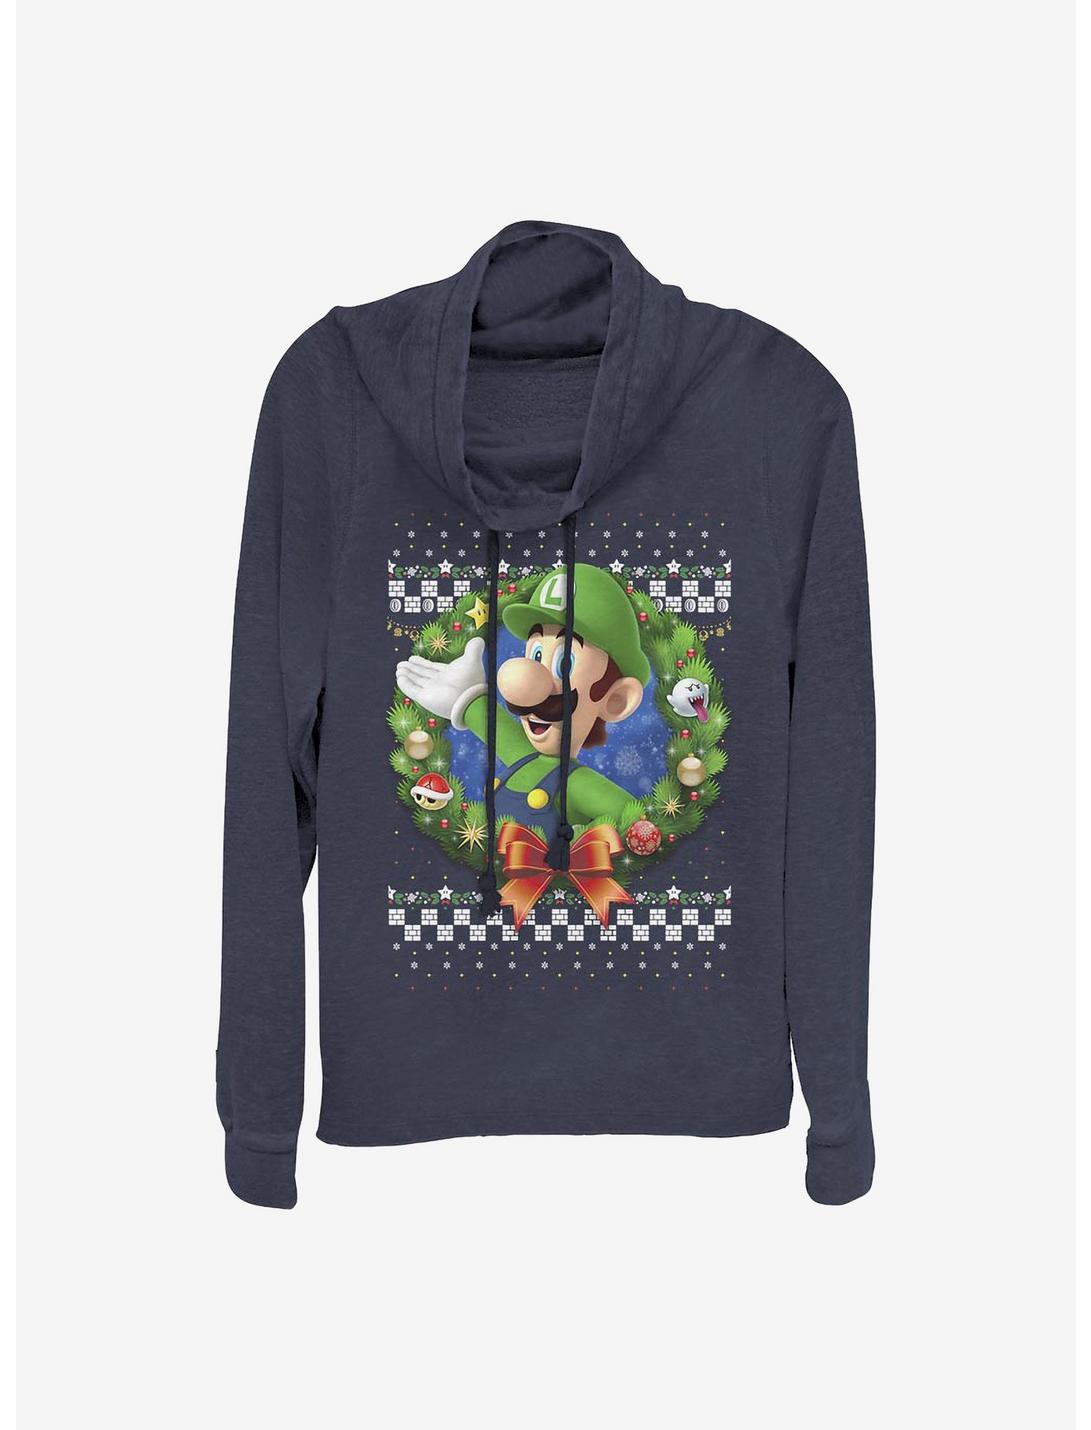 Super Mario Luigi Wreath Holiday Cowl Neck Long-Sleeve Girls Top, NAVY, hi-res